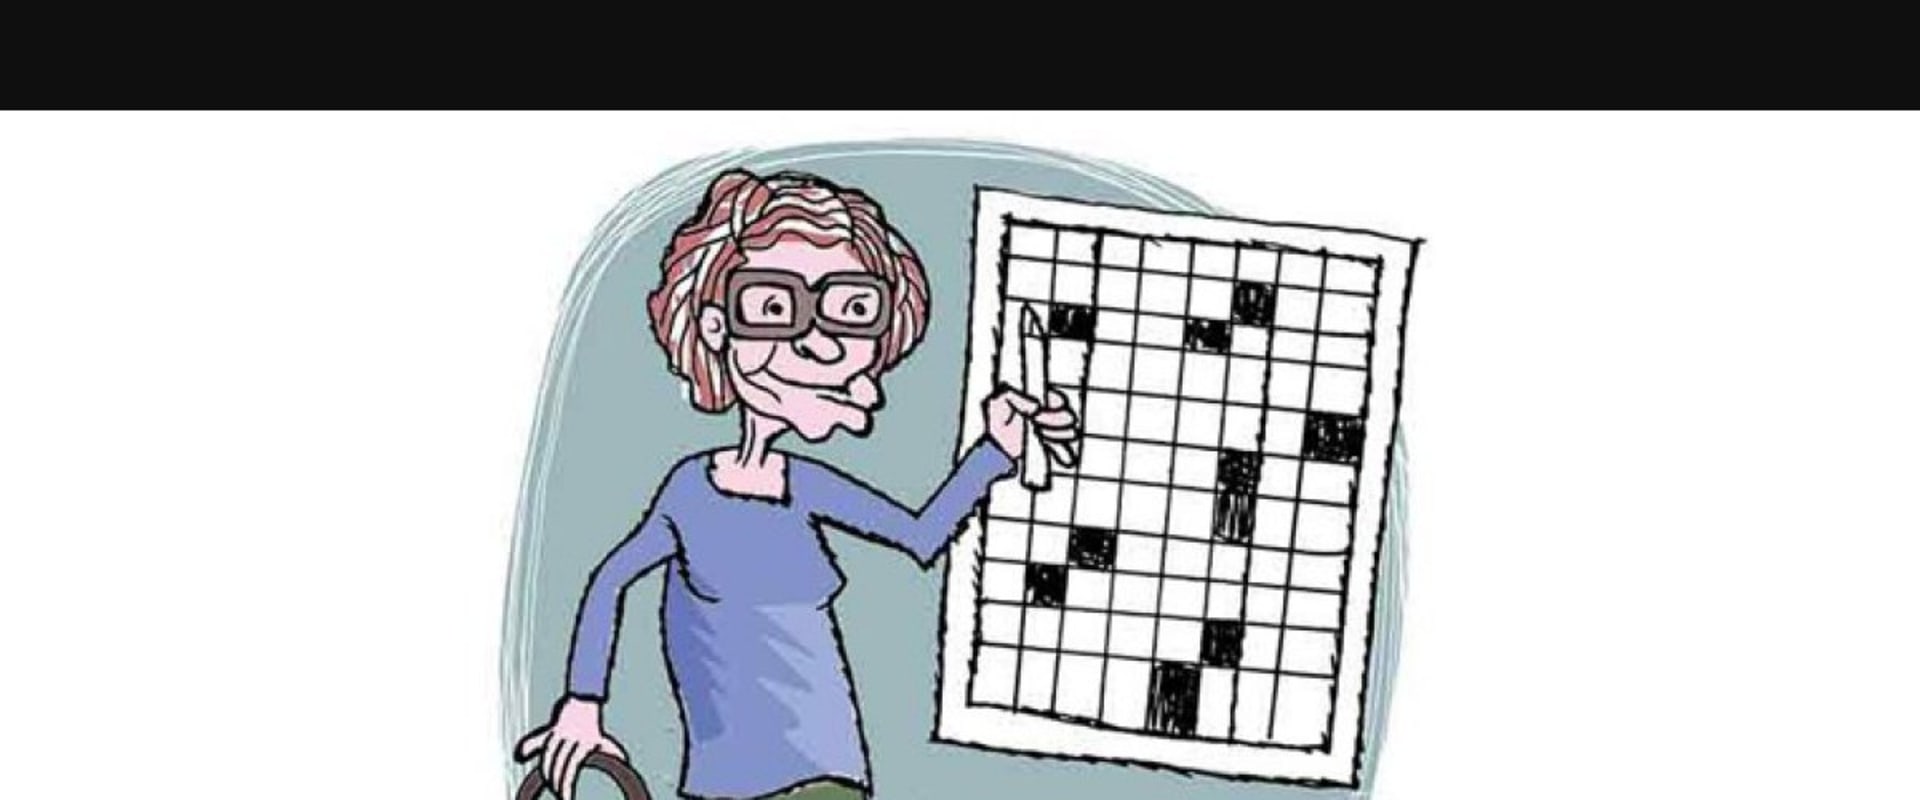 Crossword Puzzles and Sudoku: A Problem-Solving Exploration